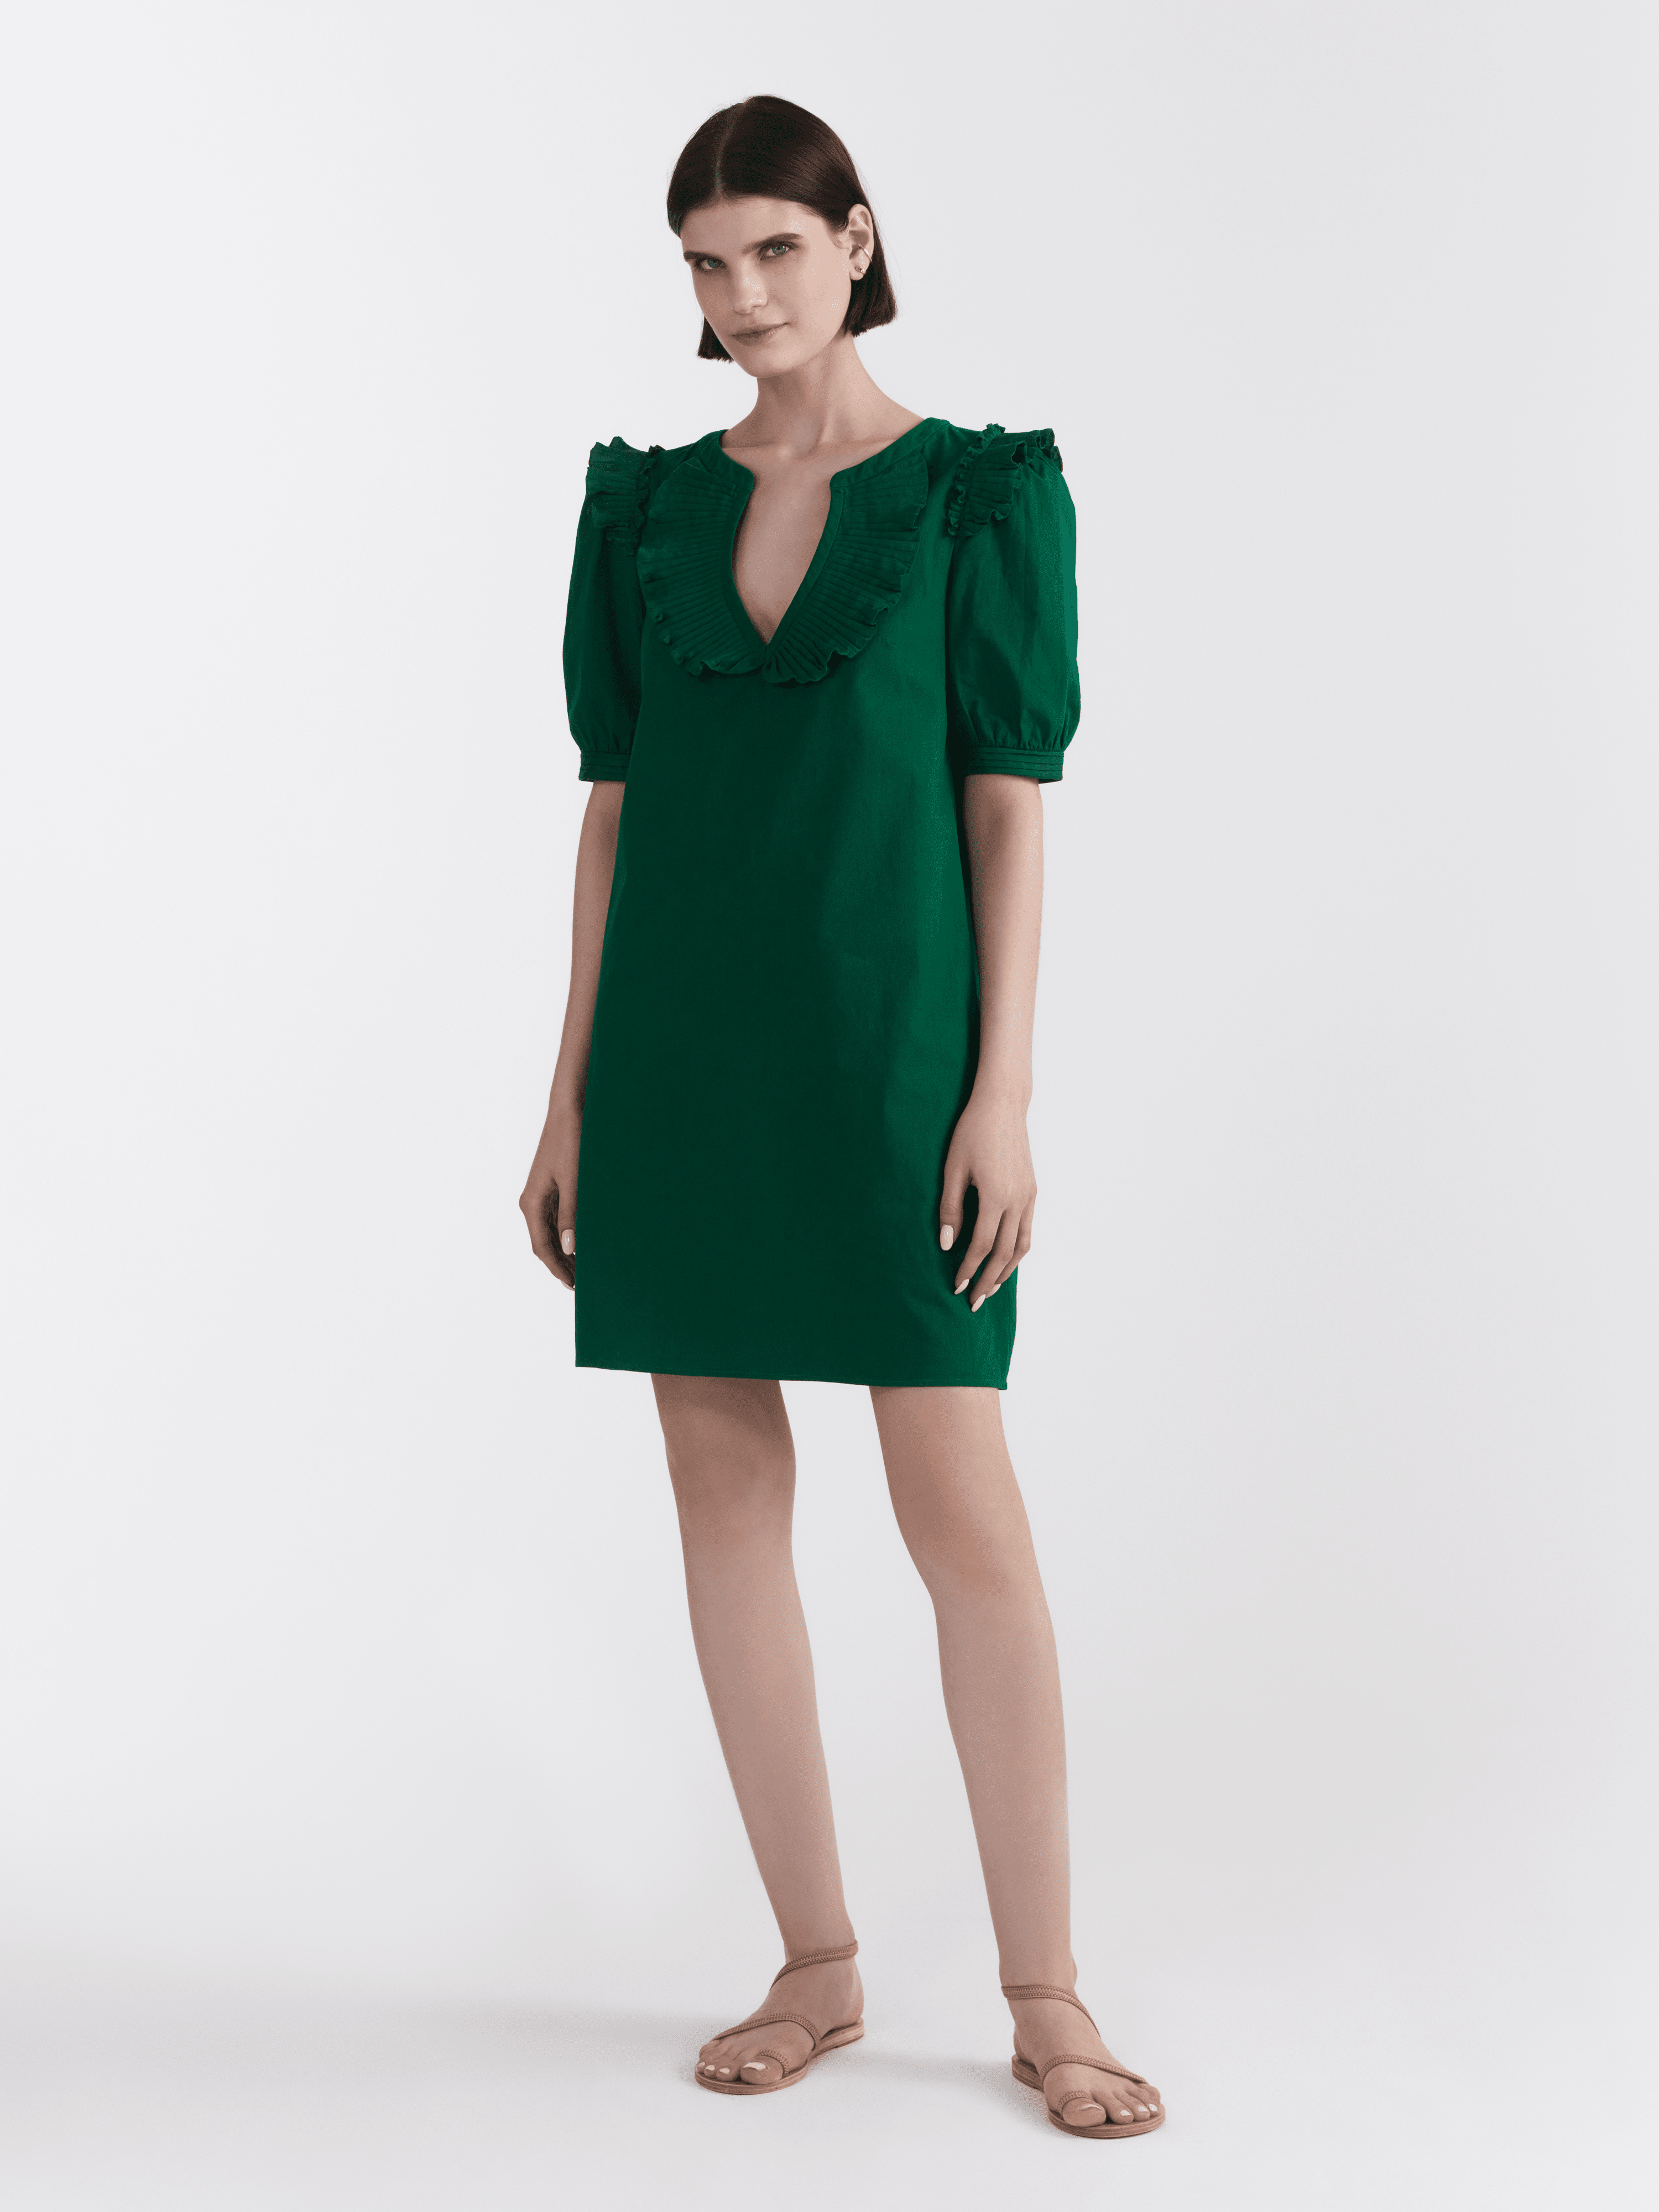 Marcie Dress in Emerald Green